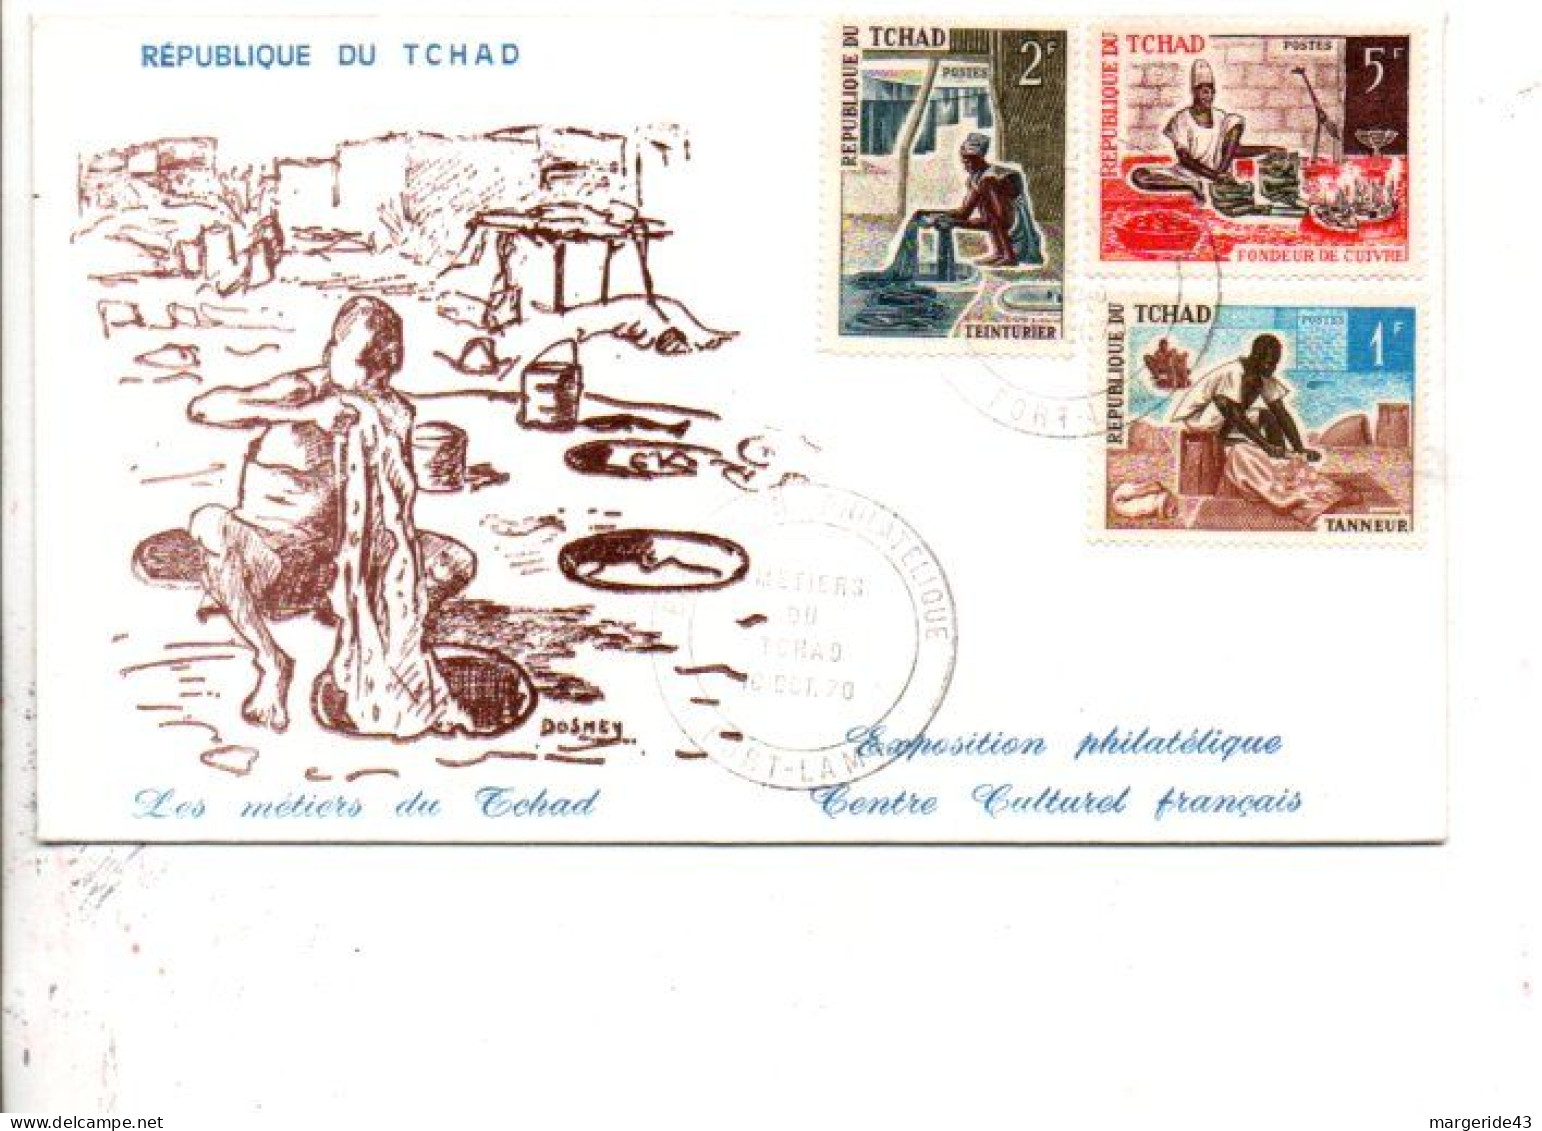 TCHAD FDC 1970 LES METIERS DU RCHAD - Tchad (1960-...)